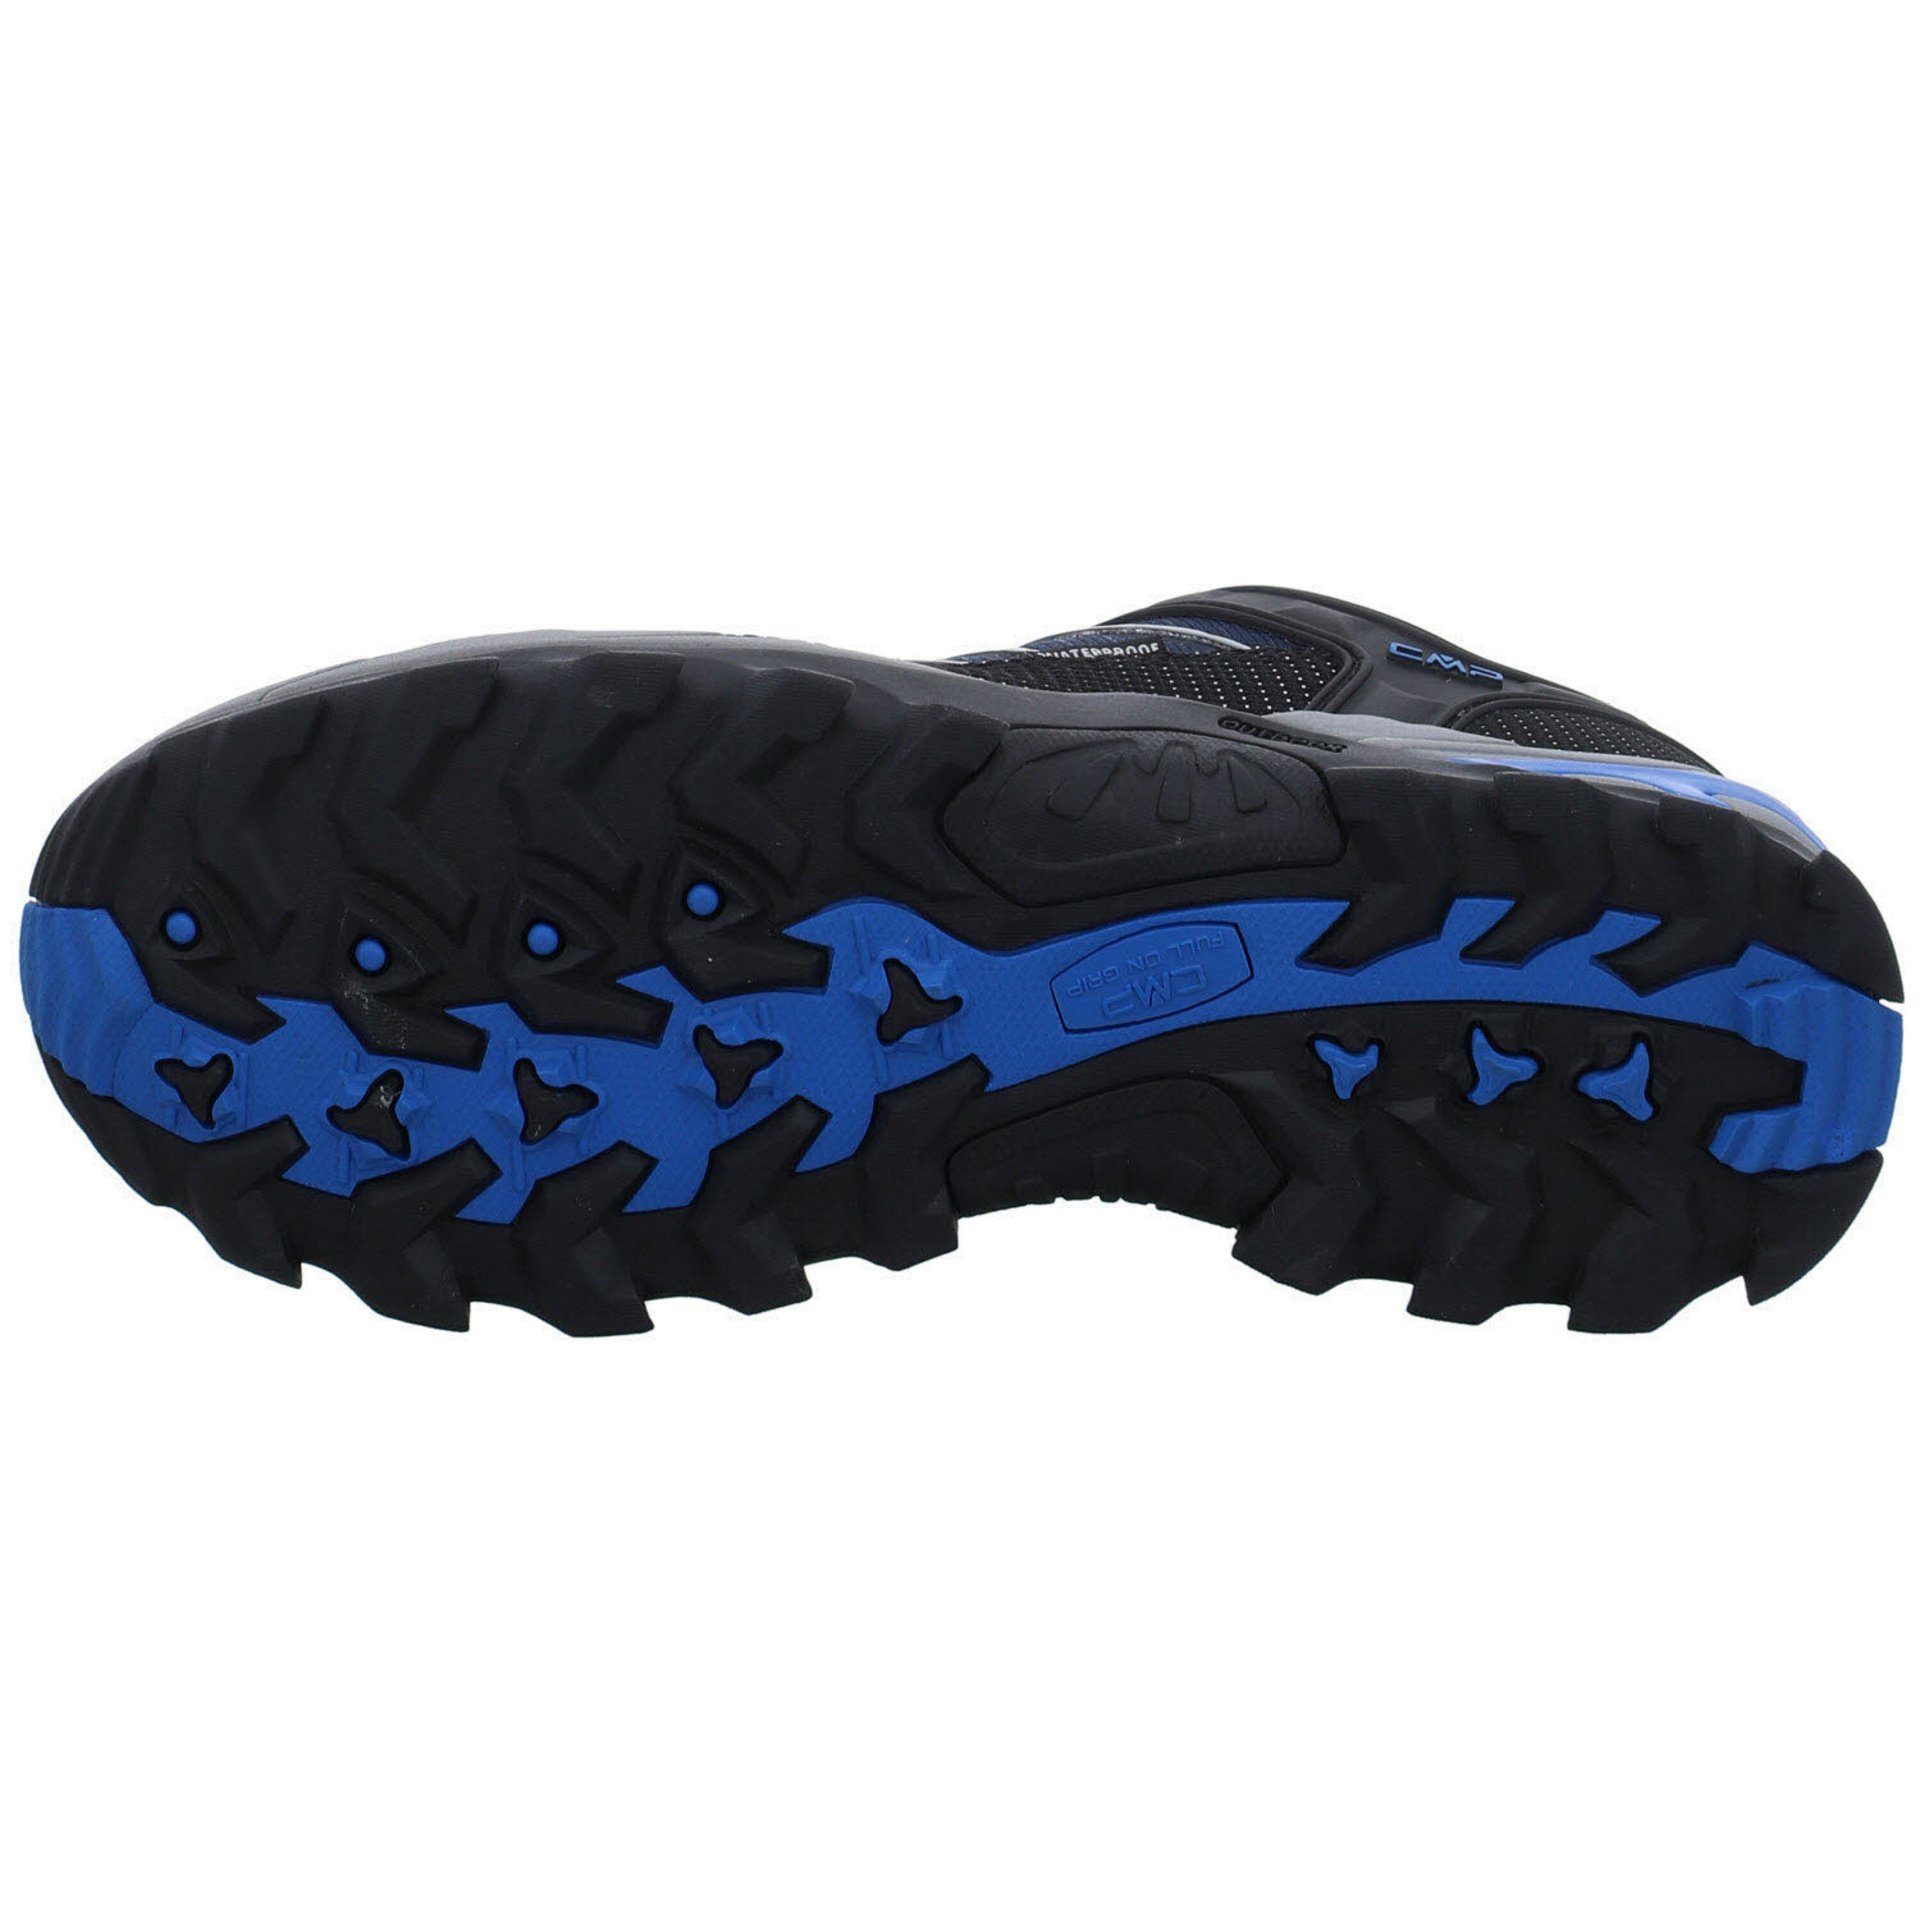 Outdoor Schuhe Outdoorschuh Rigel Herren dunkelblau Low CMP (295) Leder-/Textilkombination Outdoorschuh